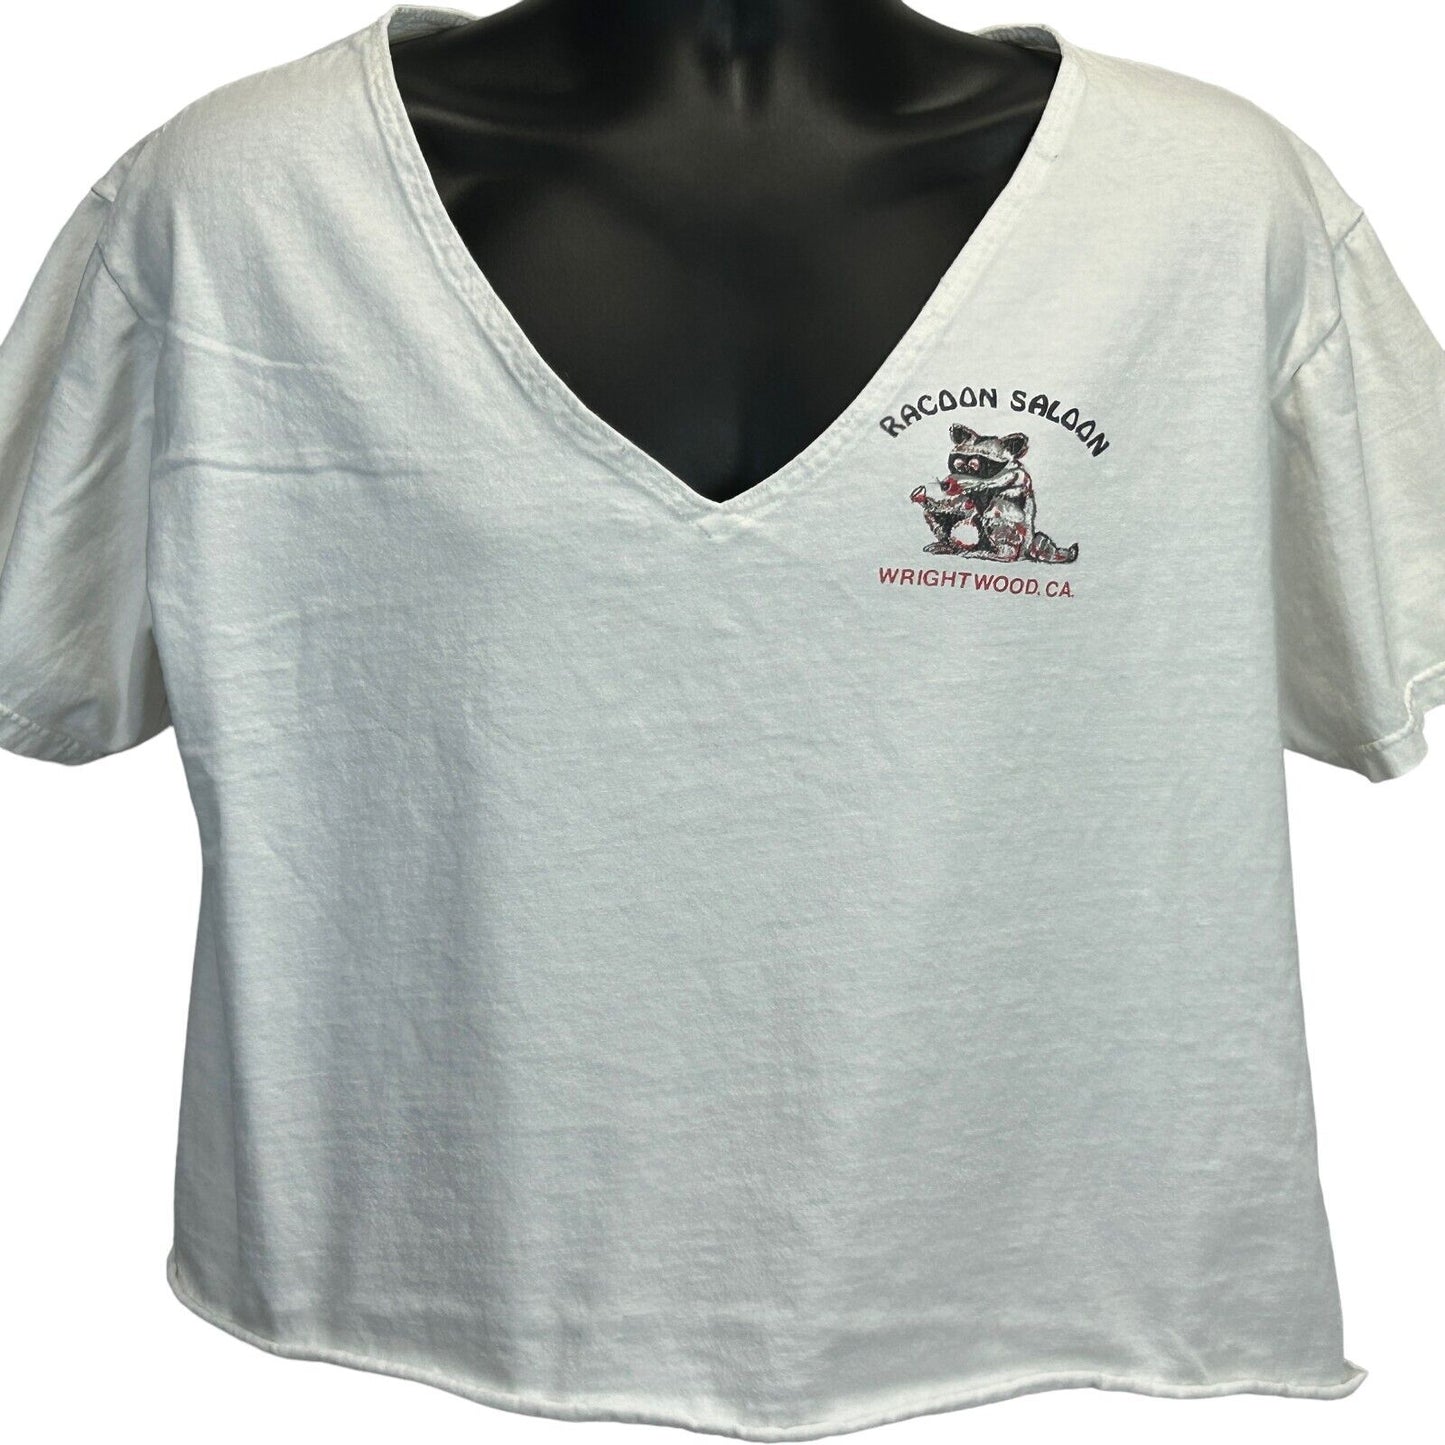 Racoon Saloon Wrightwood California Vintage 90s T Shirt Bar Crop Top Tee Large